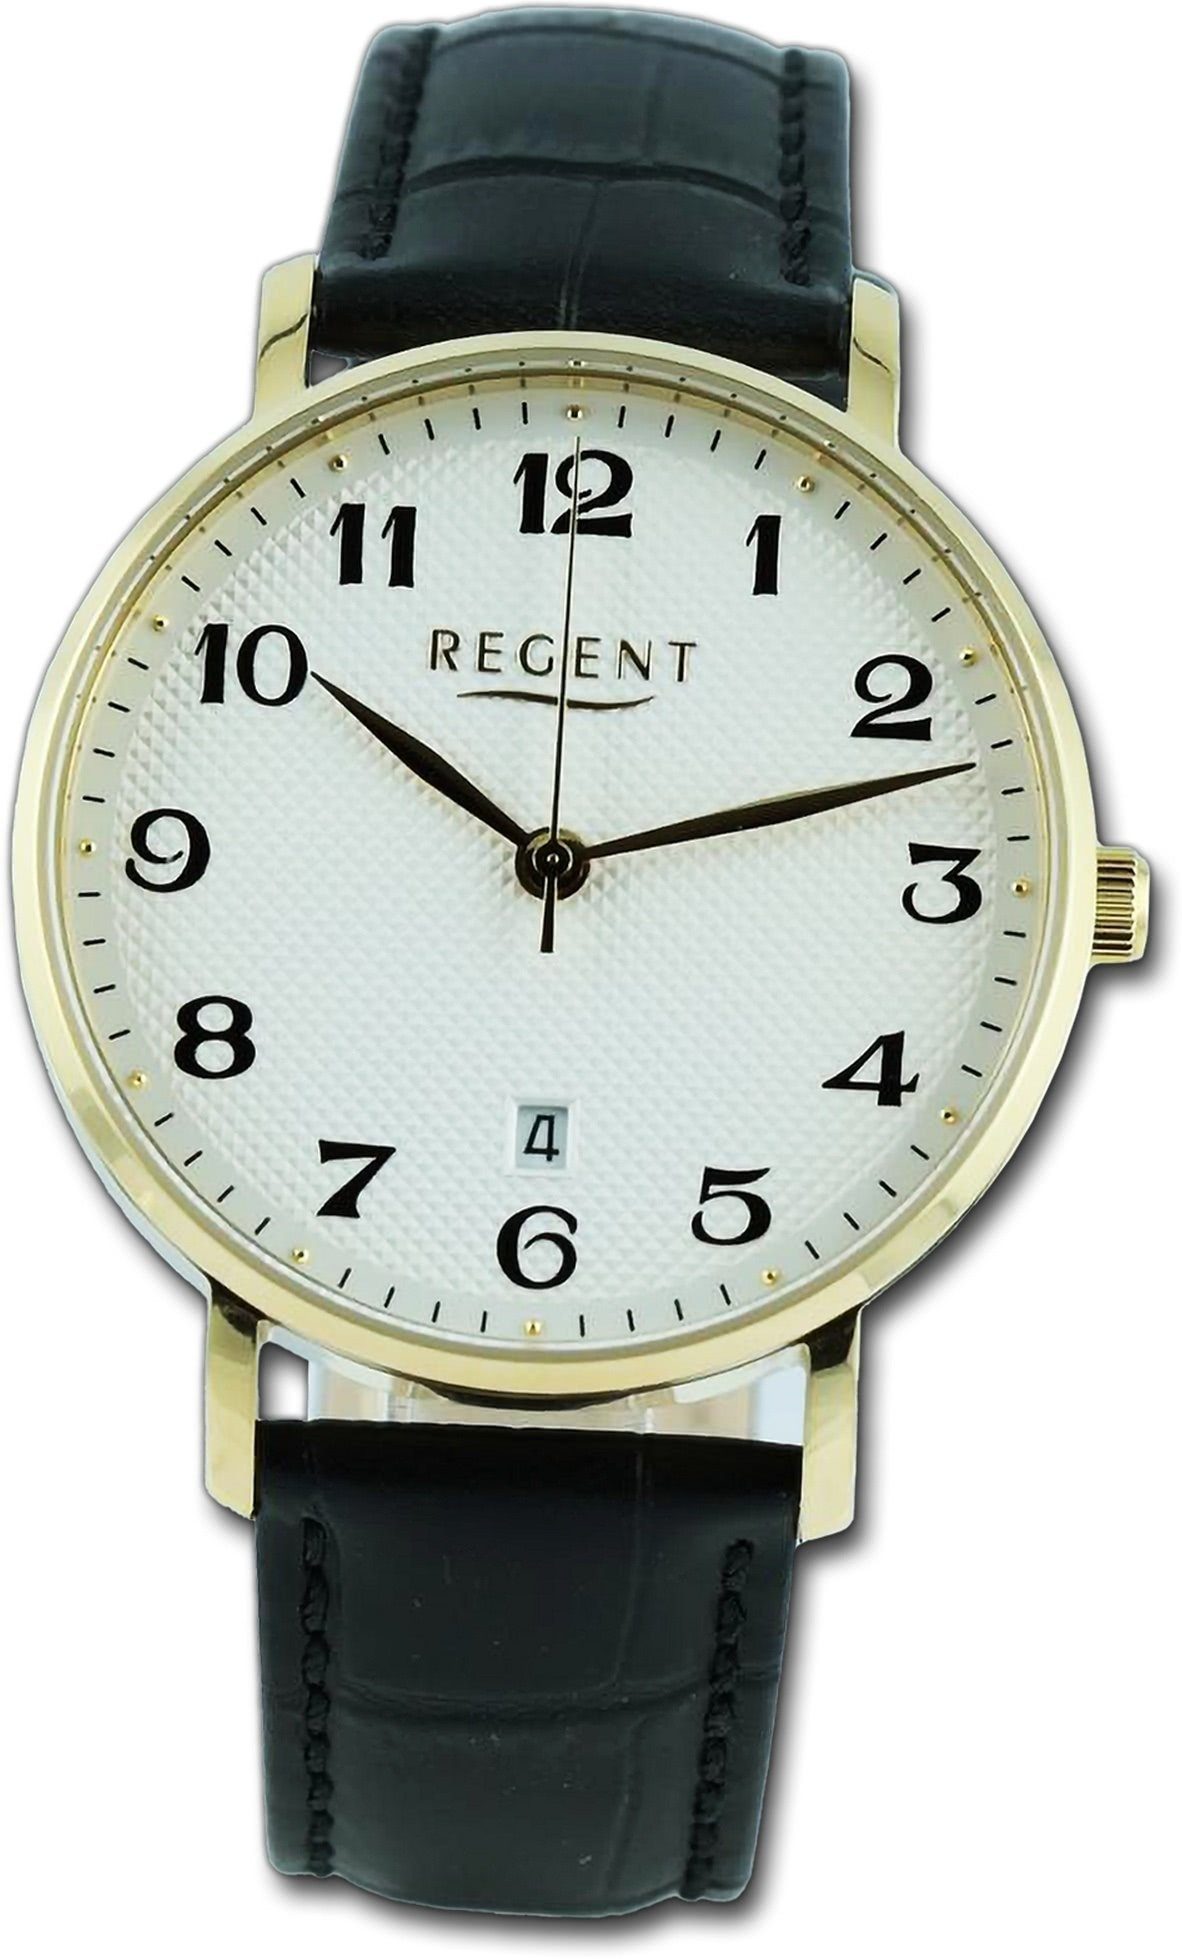 Herren Regent schwarz, Gehäuse, 39mm) extra Regent rundes Armbanduhr Herrenuhr (ca. Analog, Lederarmband groß Quarzuhr